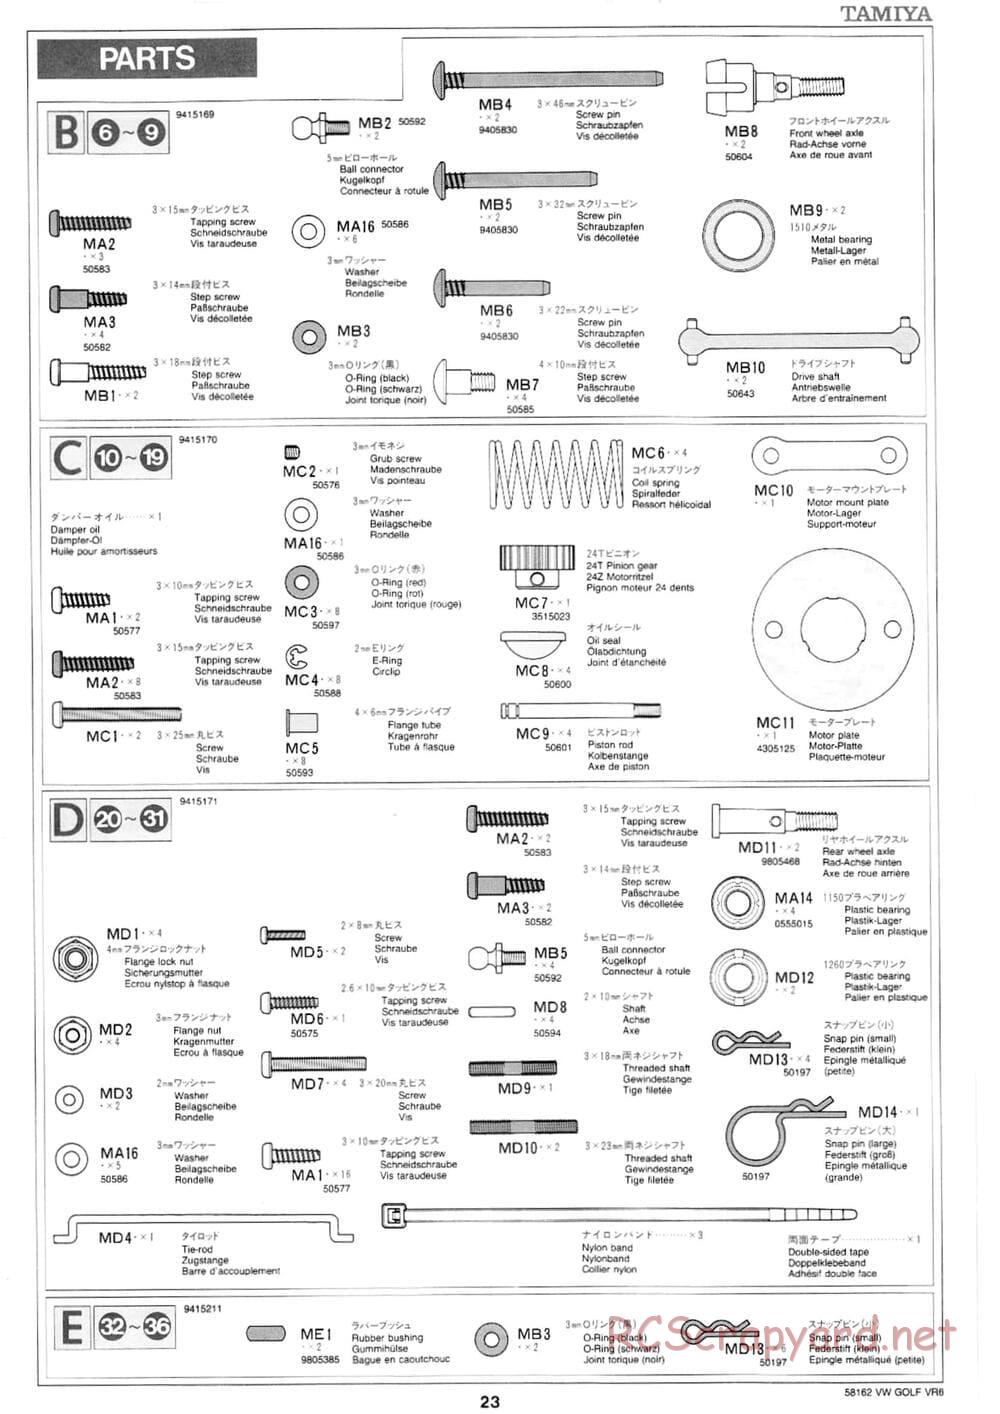 Tamiya - Volkswagen Golf VR6 - FF-01 Chassis - Manual - Page 23